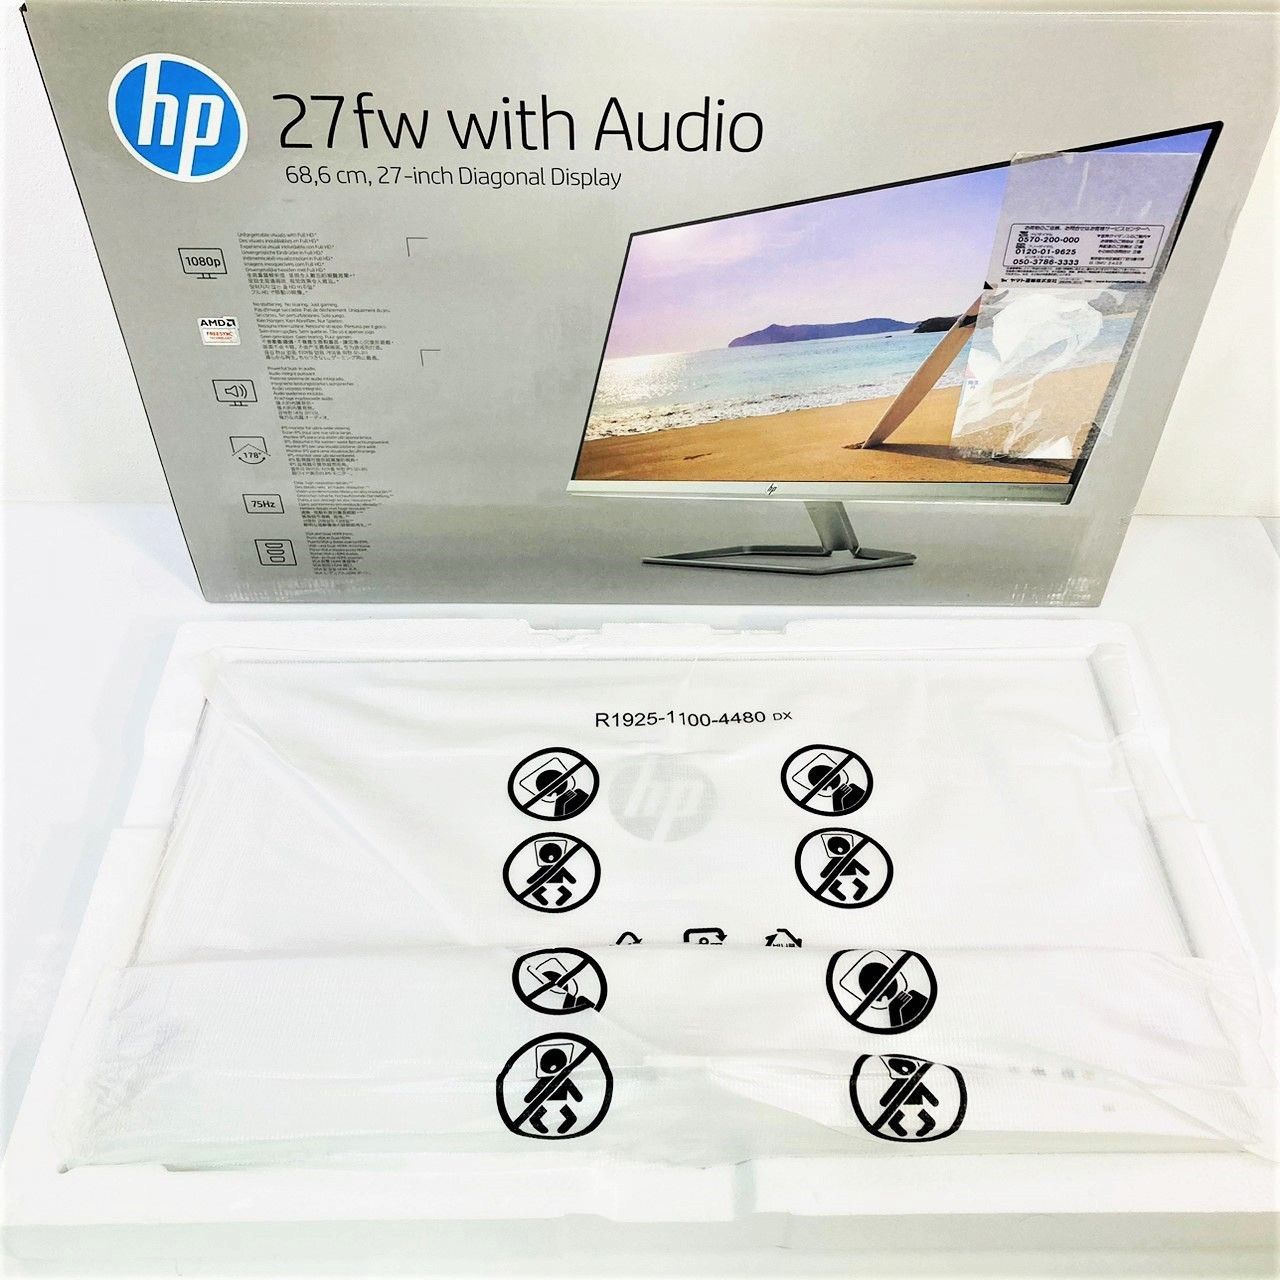 HP 27fw 27インチ モニター display with audio